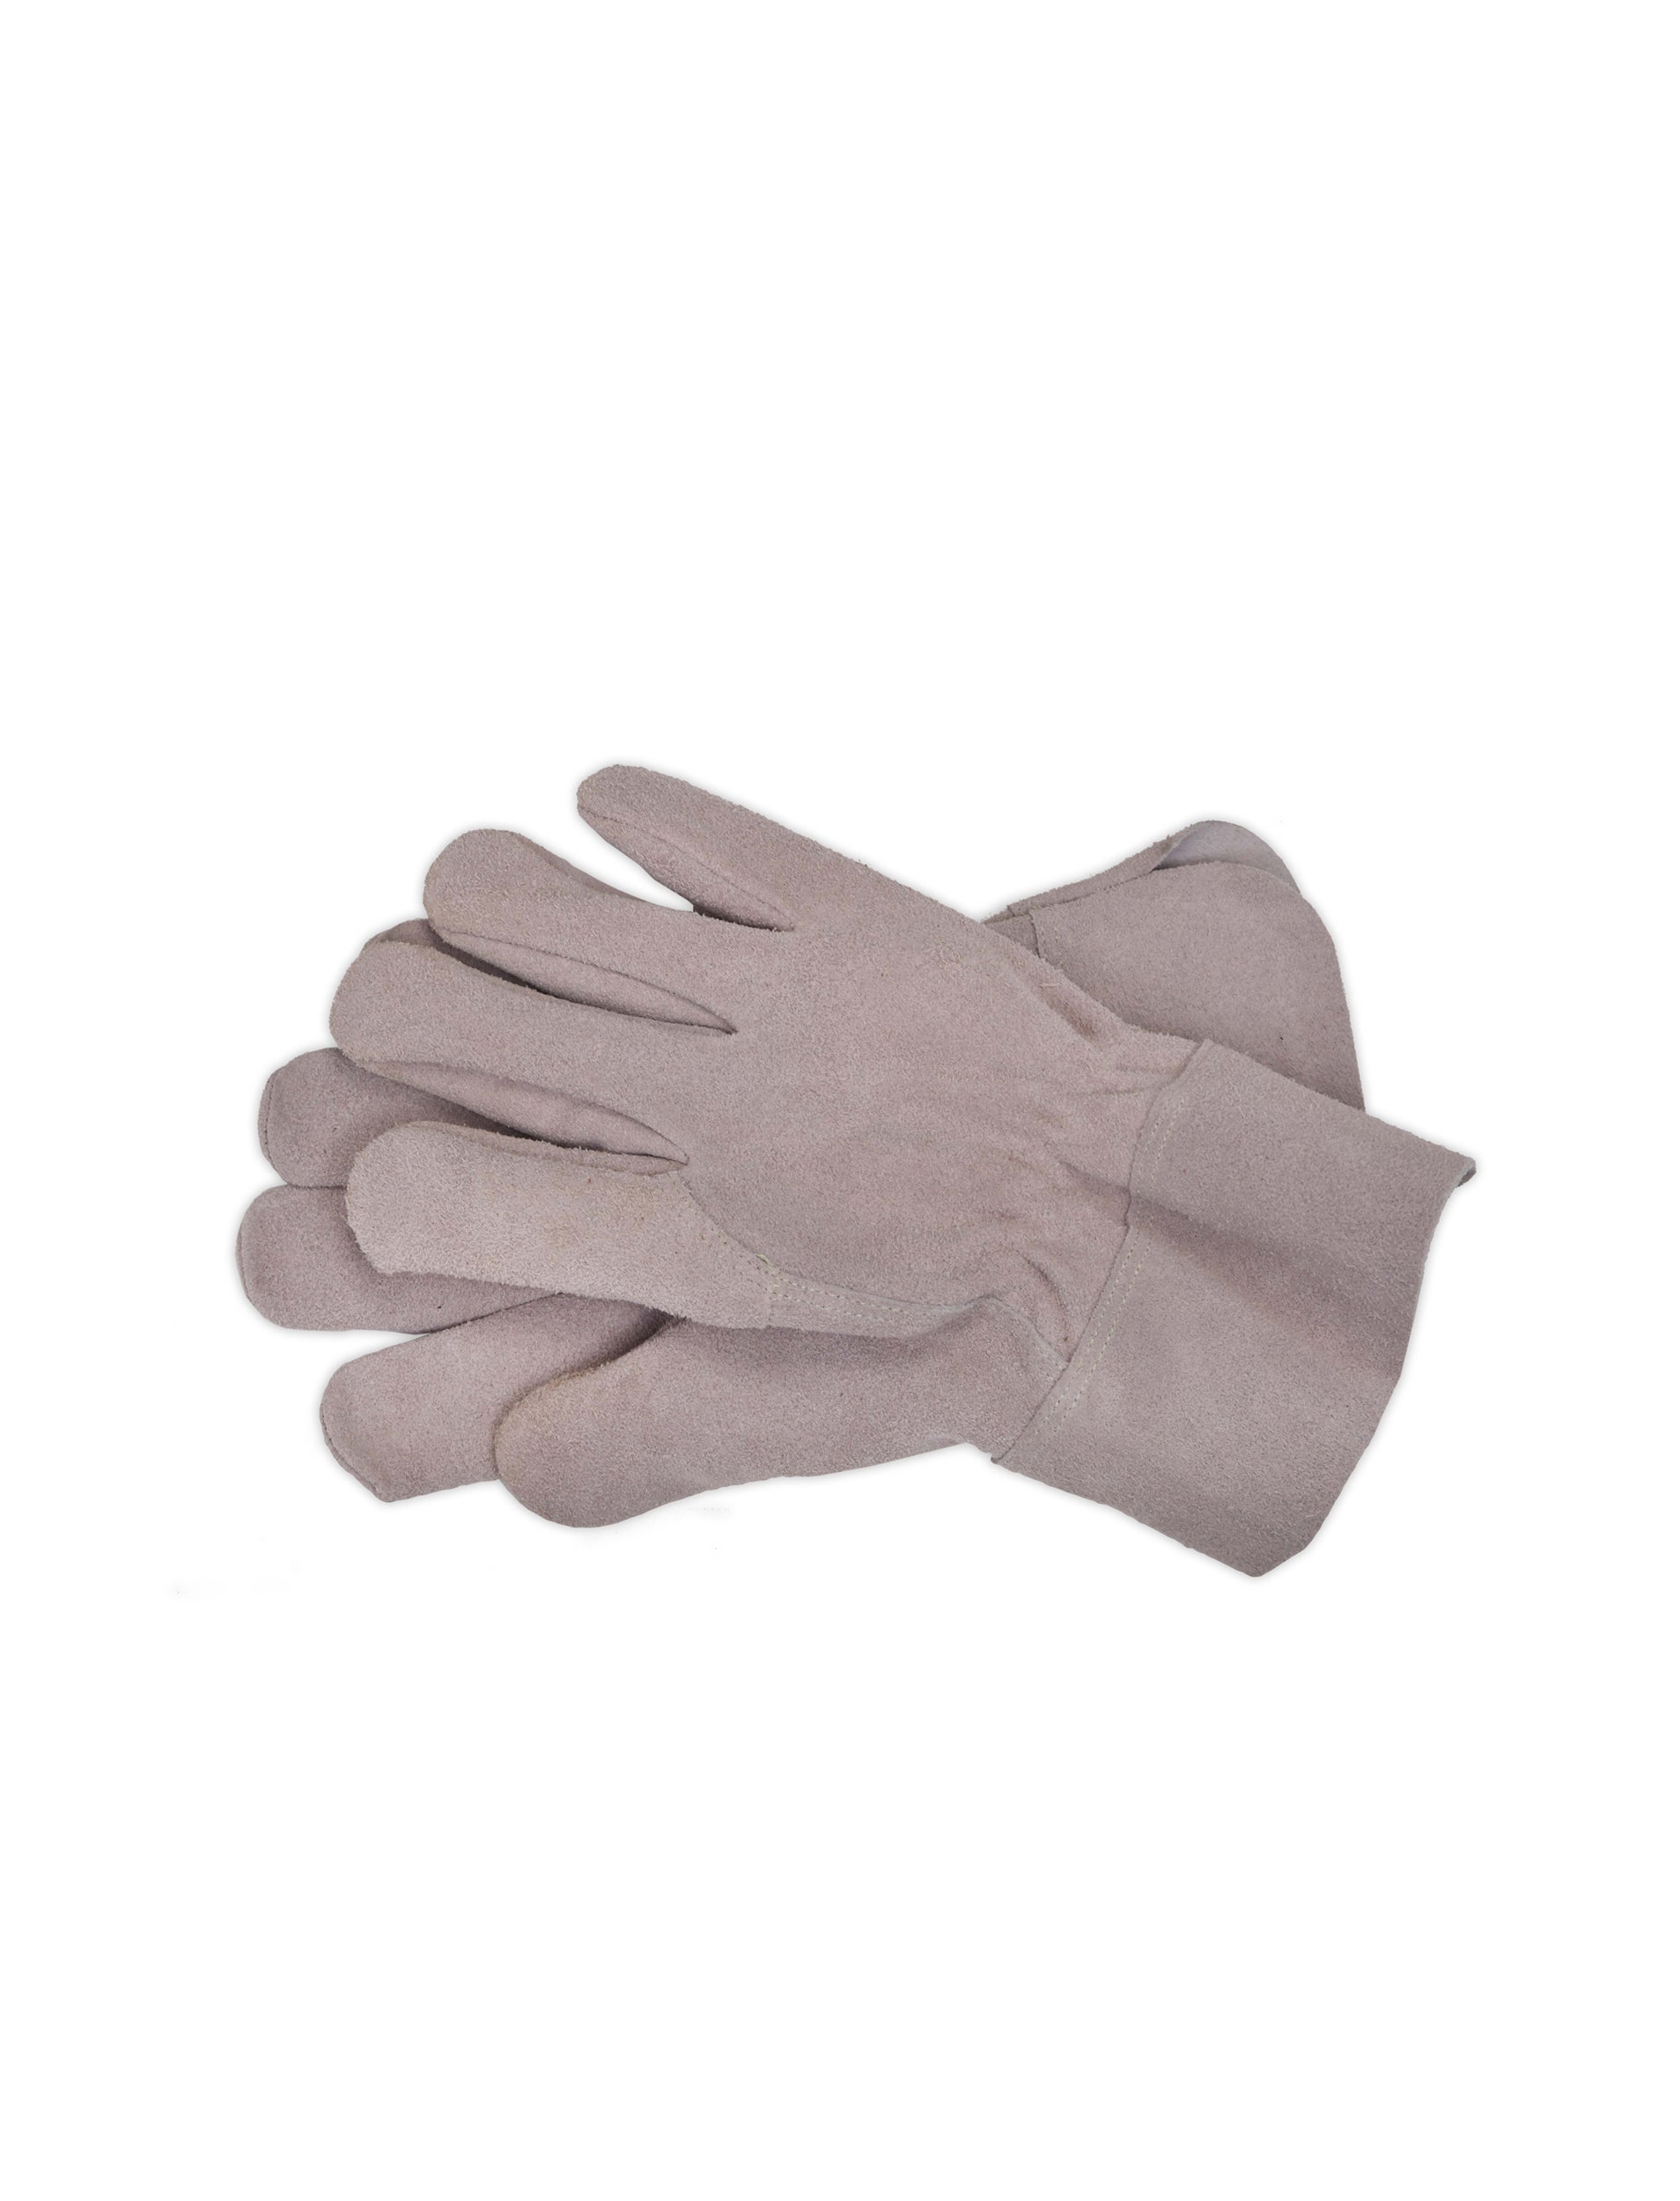 Suede garden gloves in natural colour